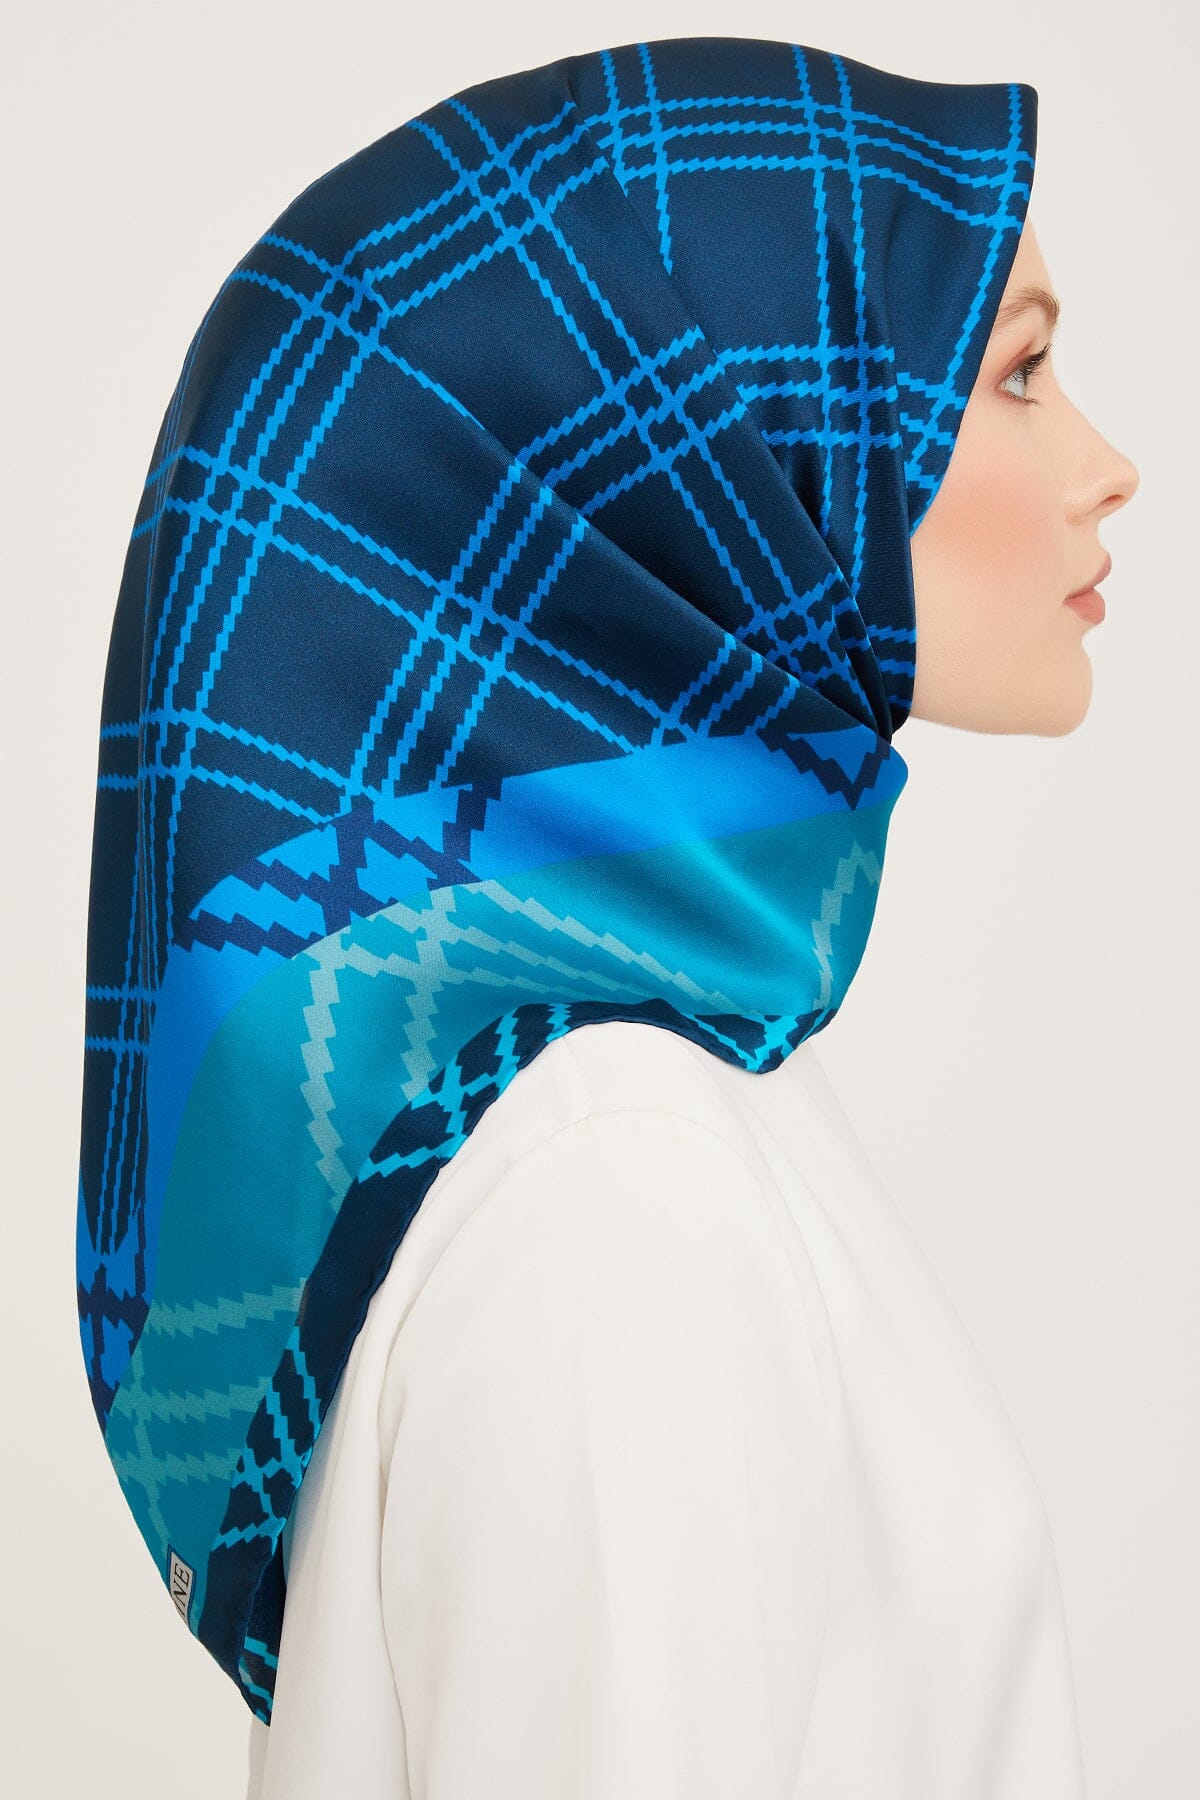 Armine Como Turkish Silk Scarf #50 Silk Hijabs,Armine Armine 